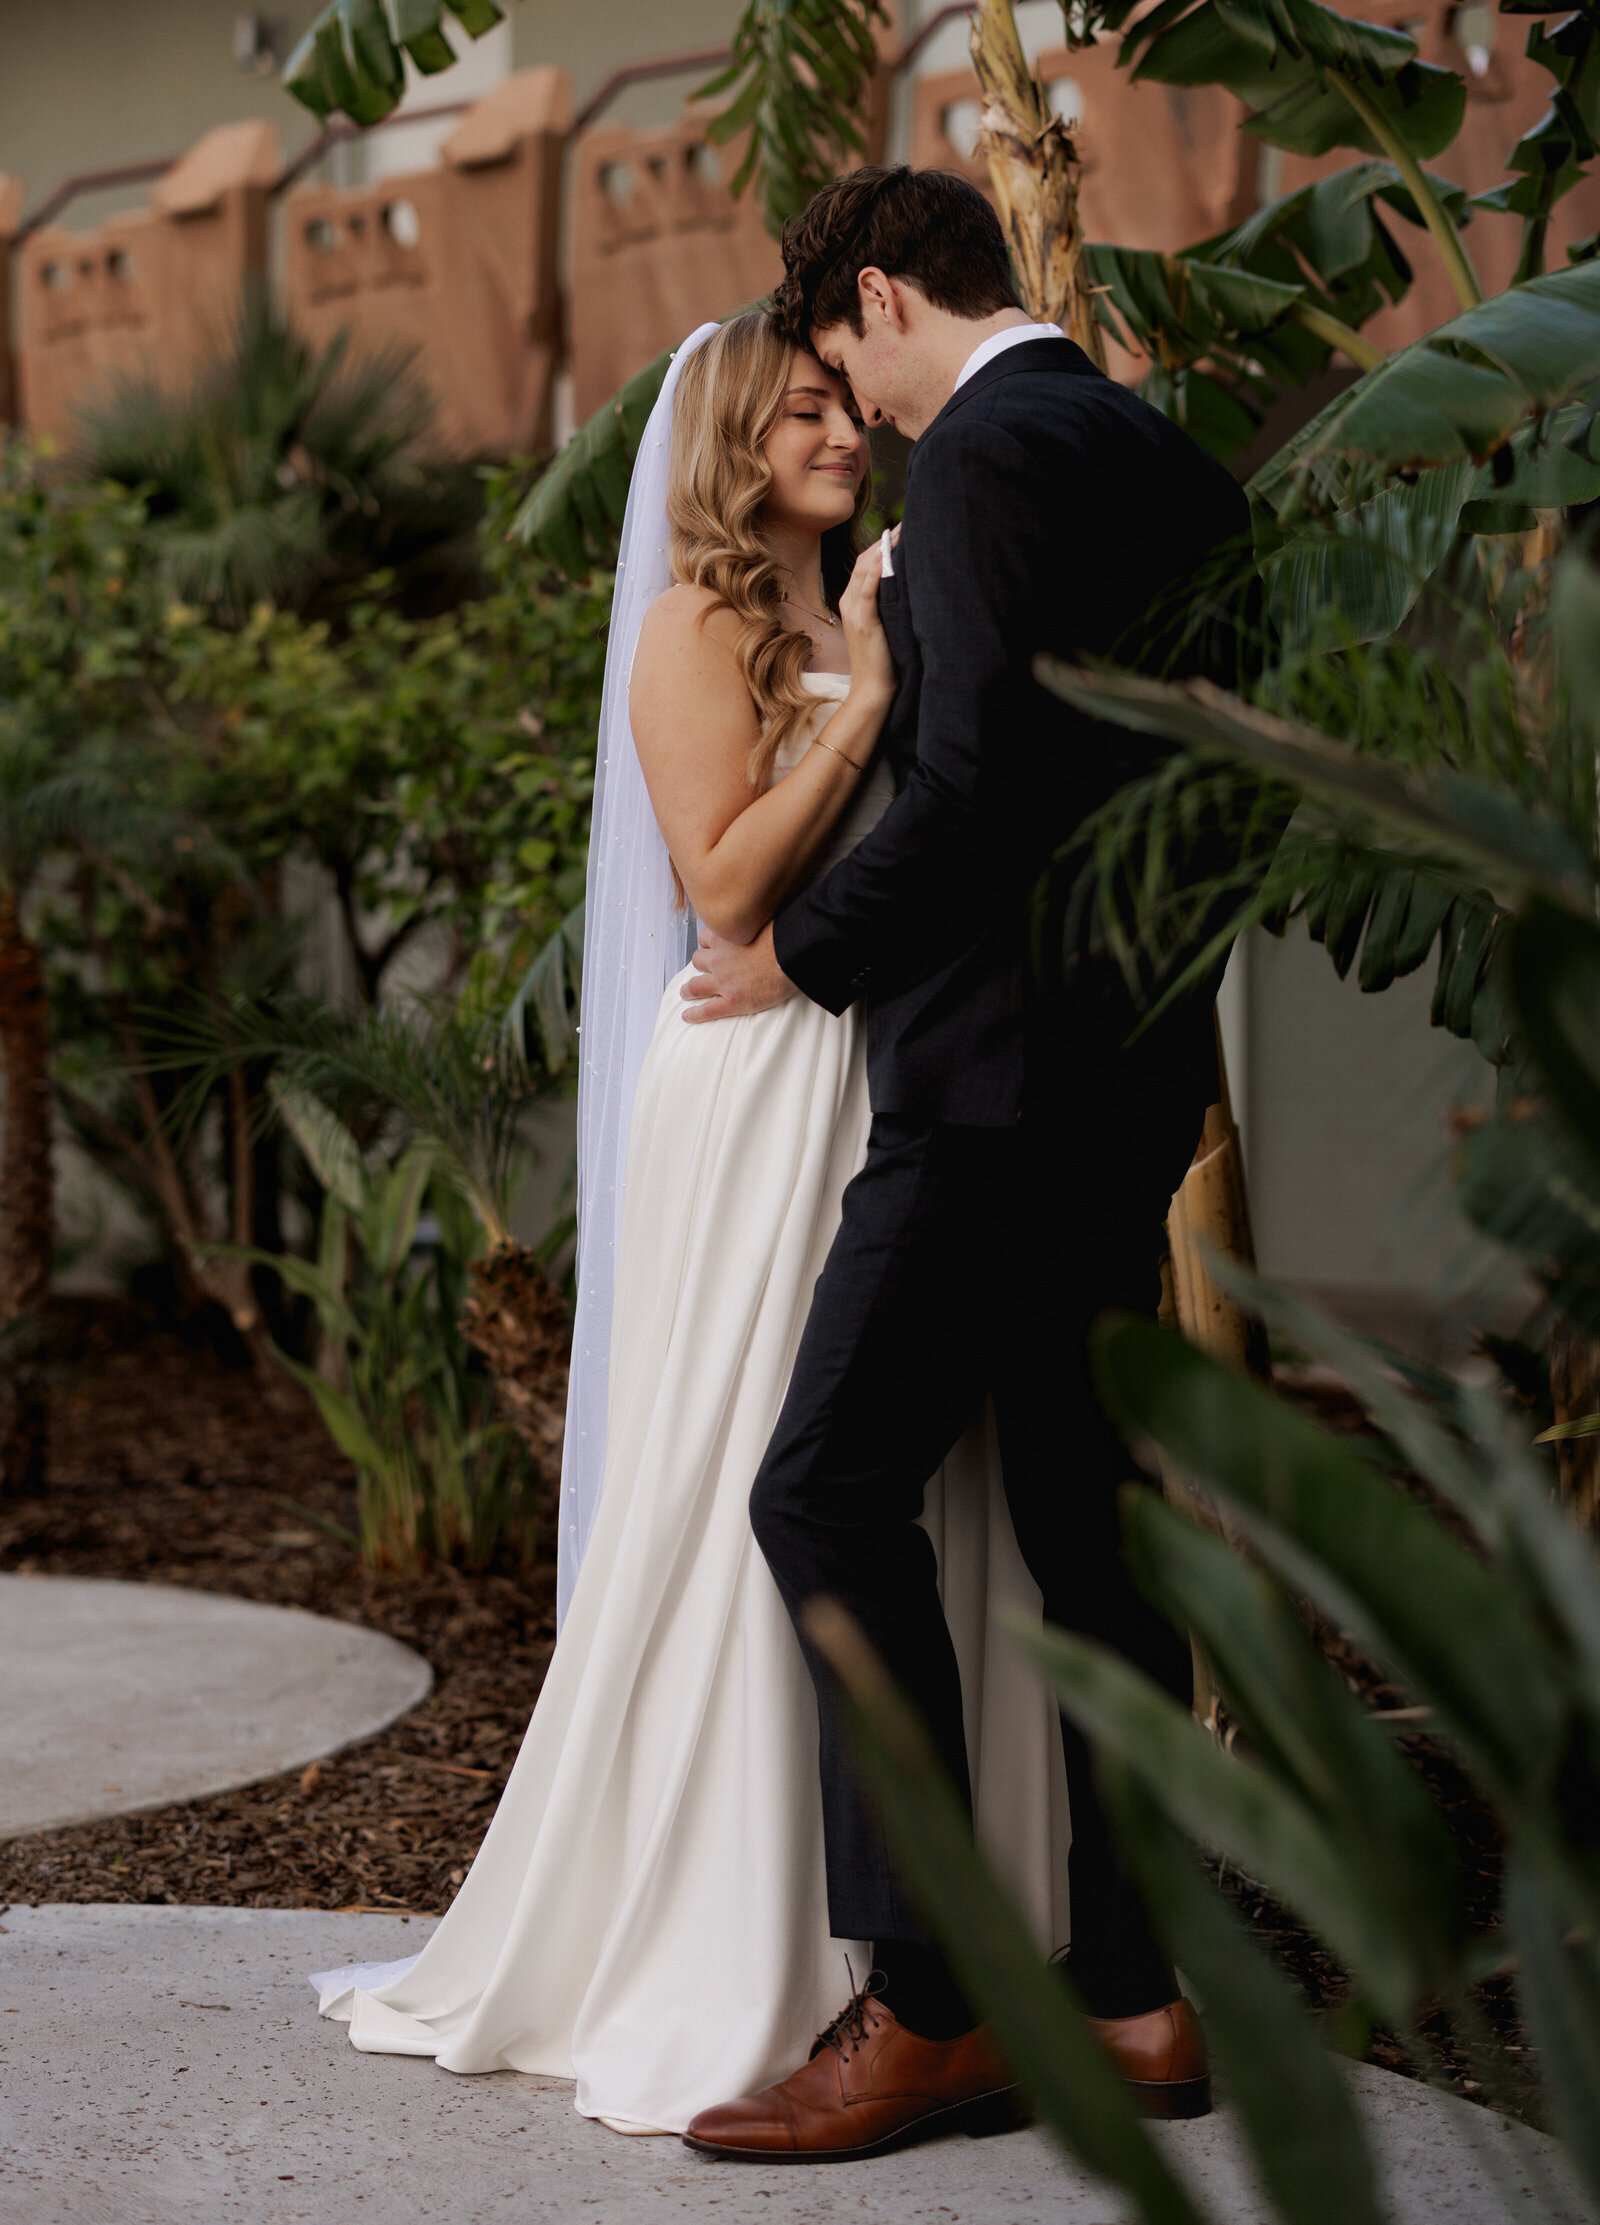 Photos of wedding couple, taken at Scottsdale Valley Ho Hotel in Scottsdale Arizona, Taken by Kollar photography, Arizona Elopement Photographer